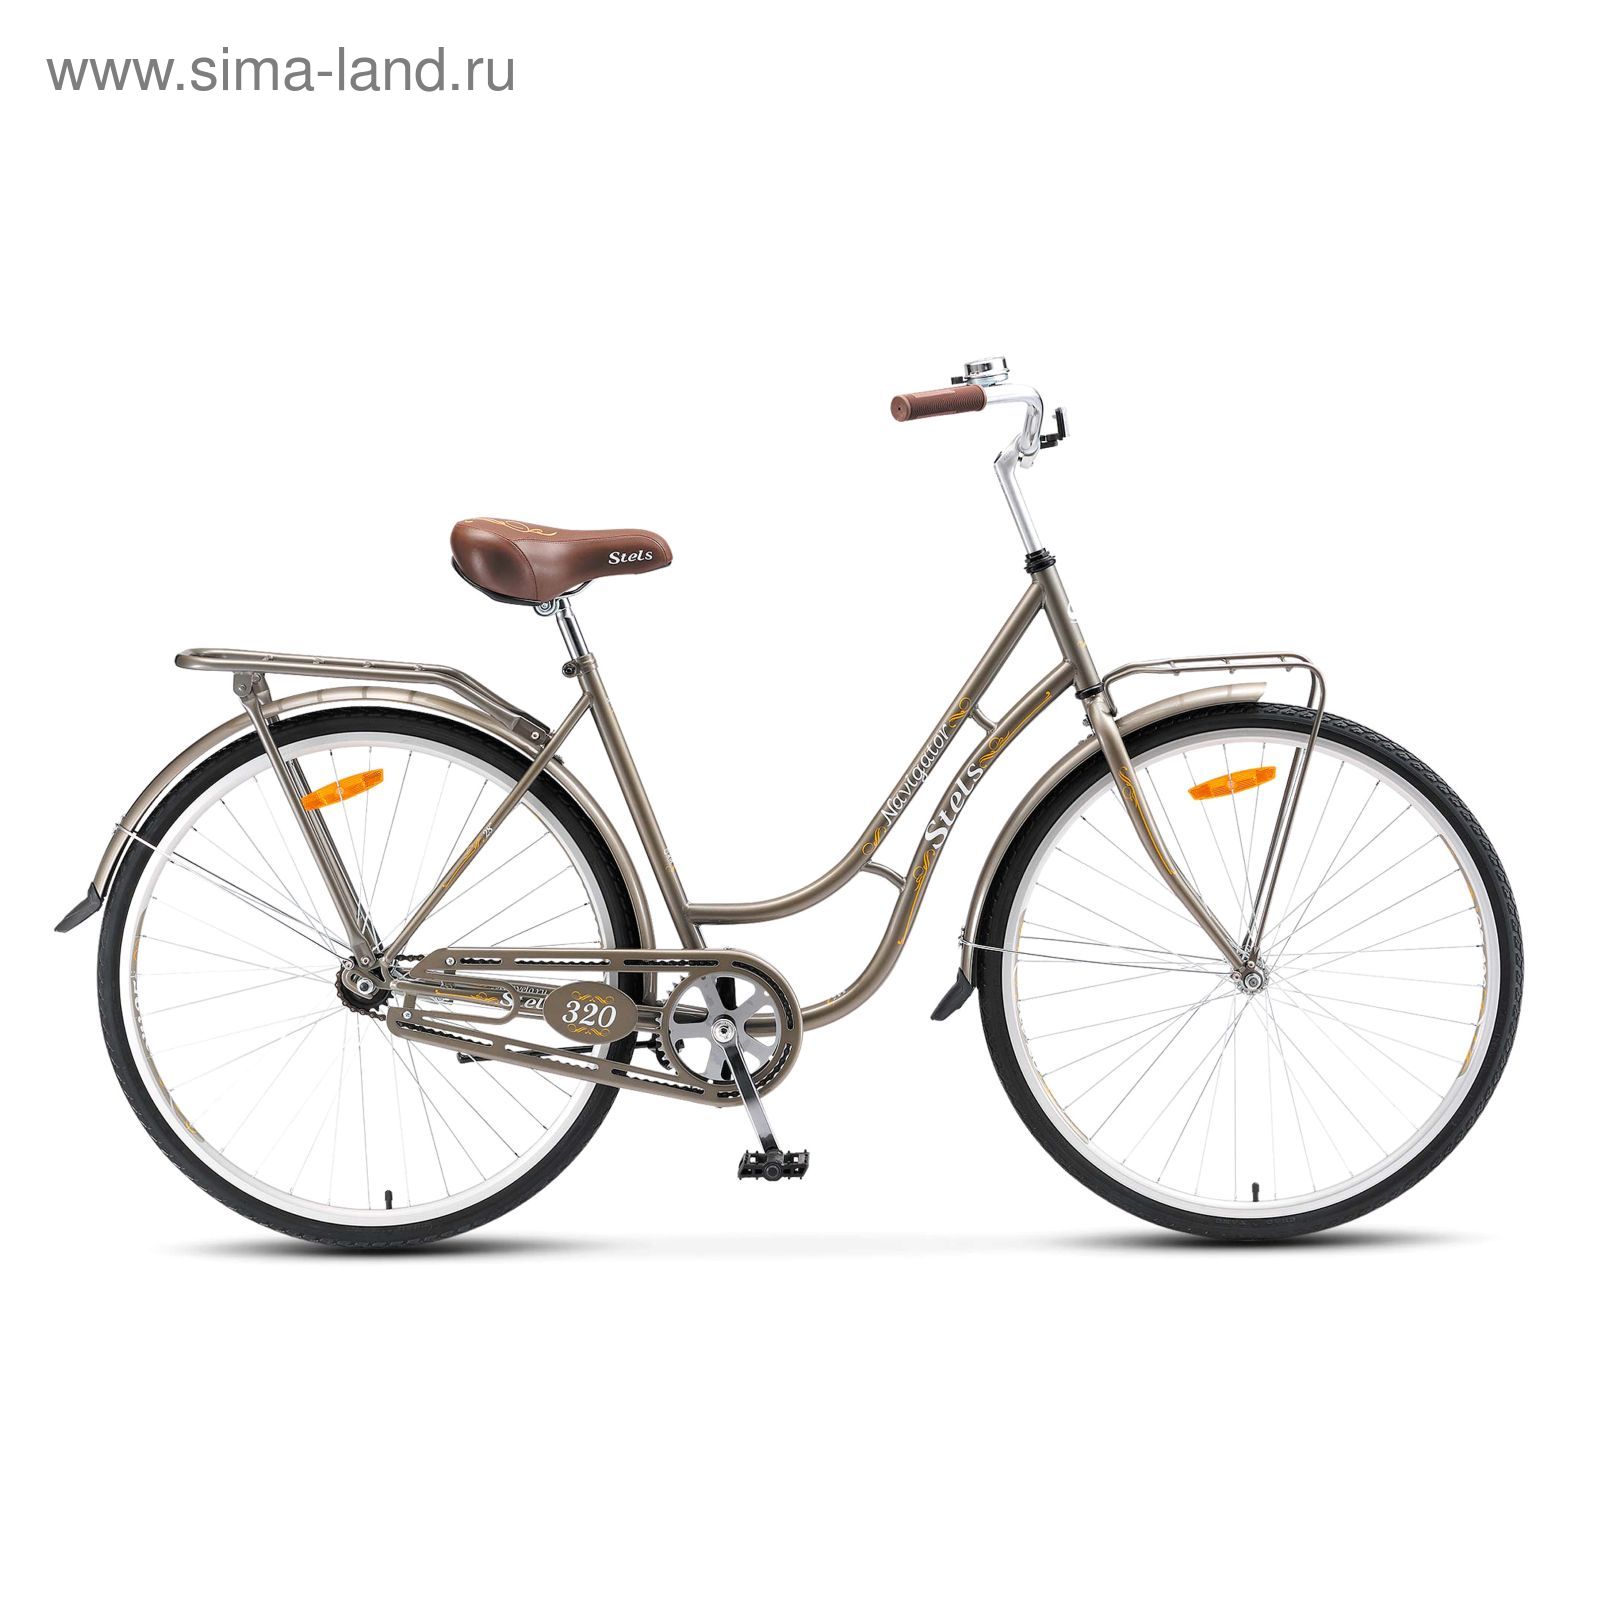 Велосипед 28" Stels Navigator-320 Lady, 2017, цвет серый, размер 19,5"